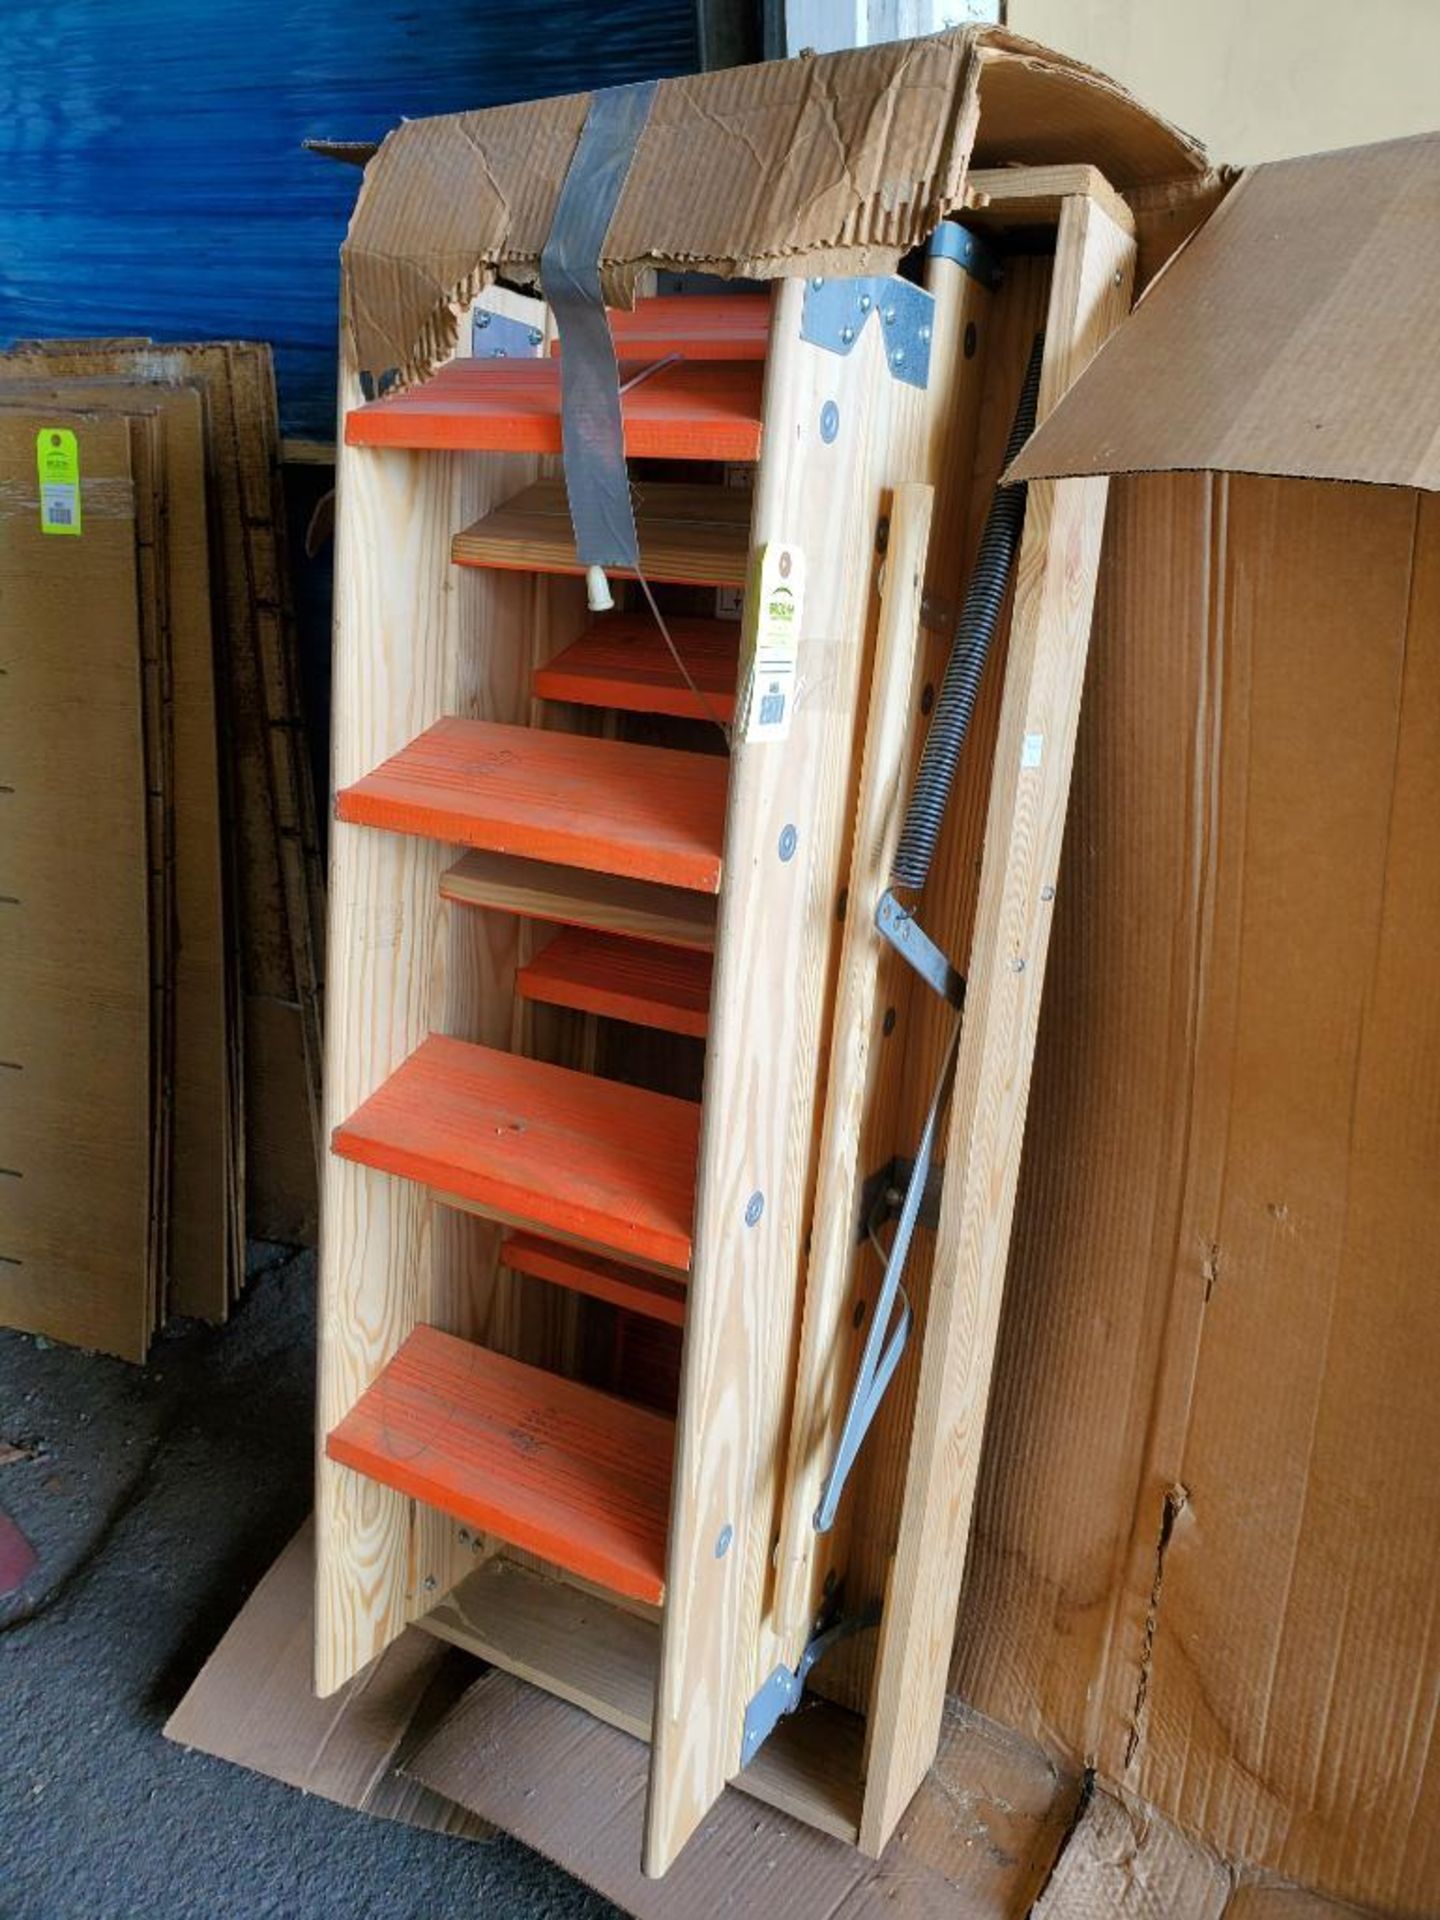 Drop down attic ladder. - Image 2 of 5